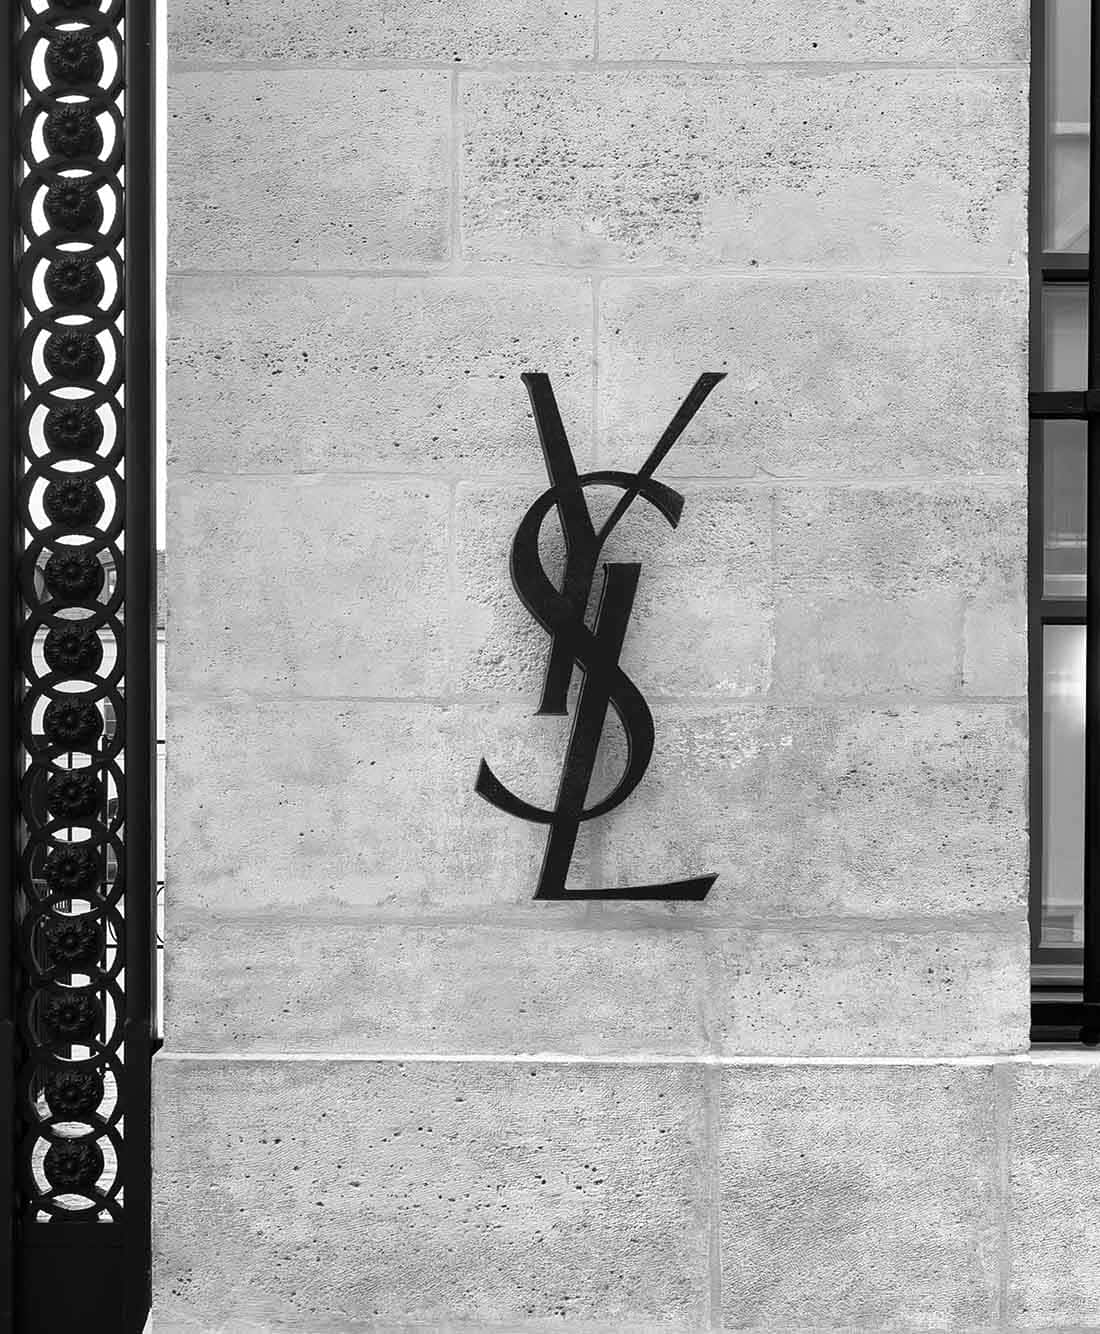 Yves Saint Laurent’s iconic interlocking YSL logo